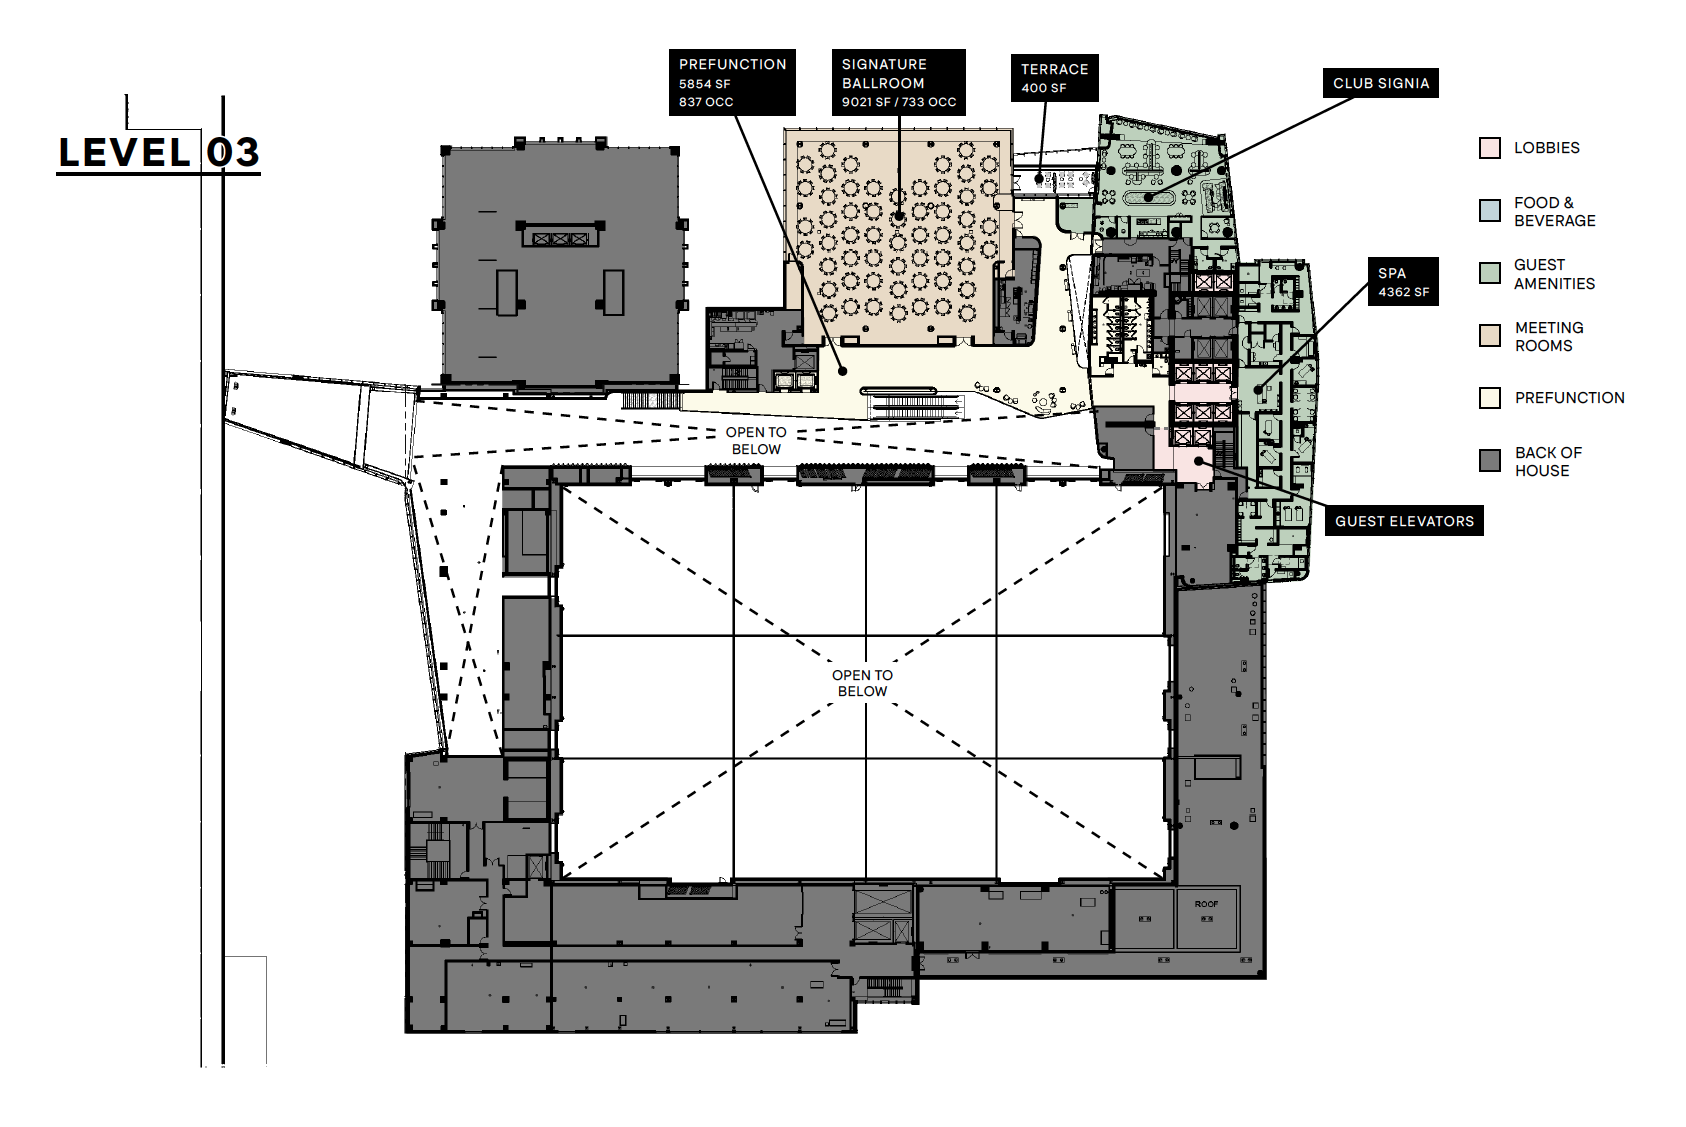 Signia By Hilton Level 3 Floor Plan